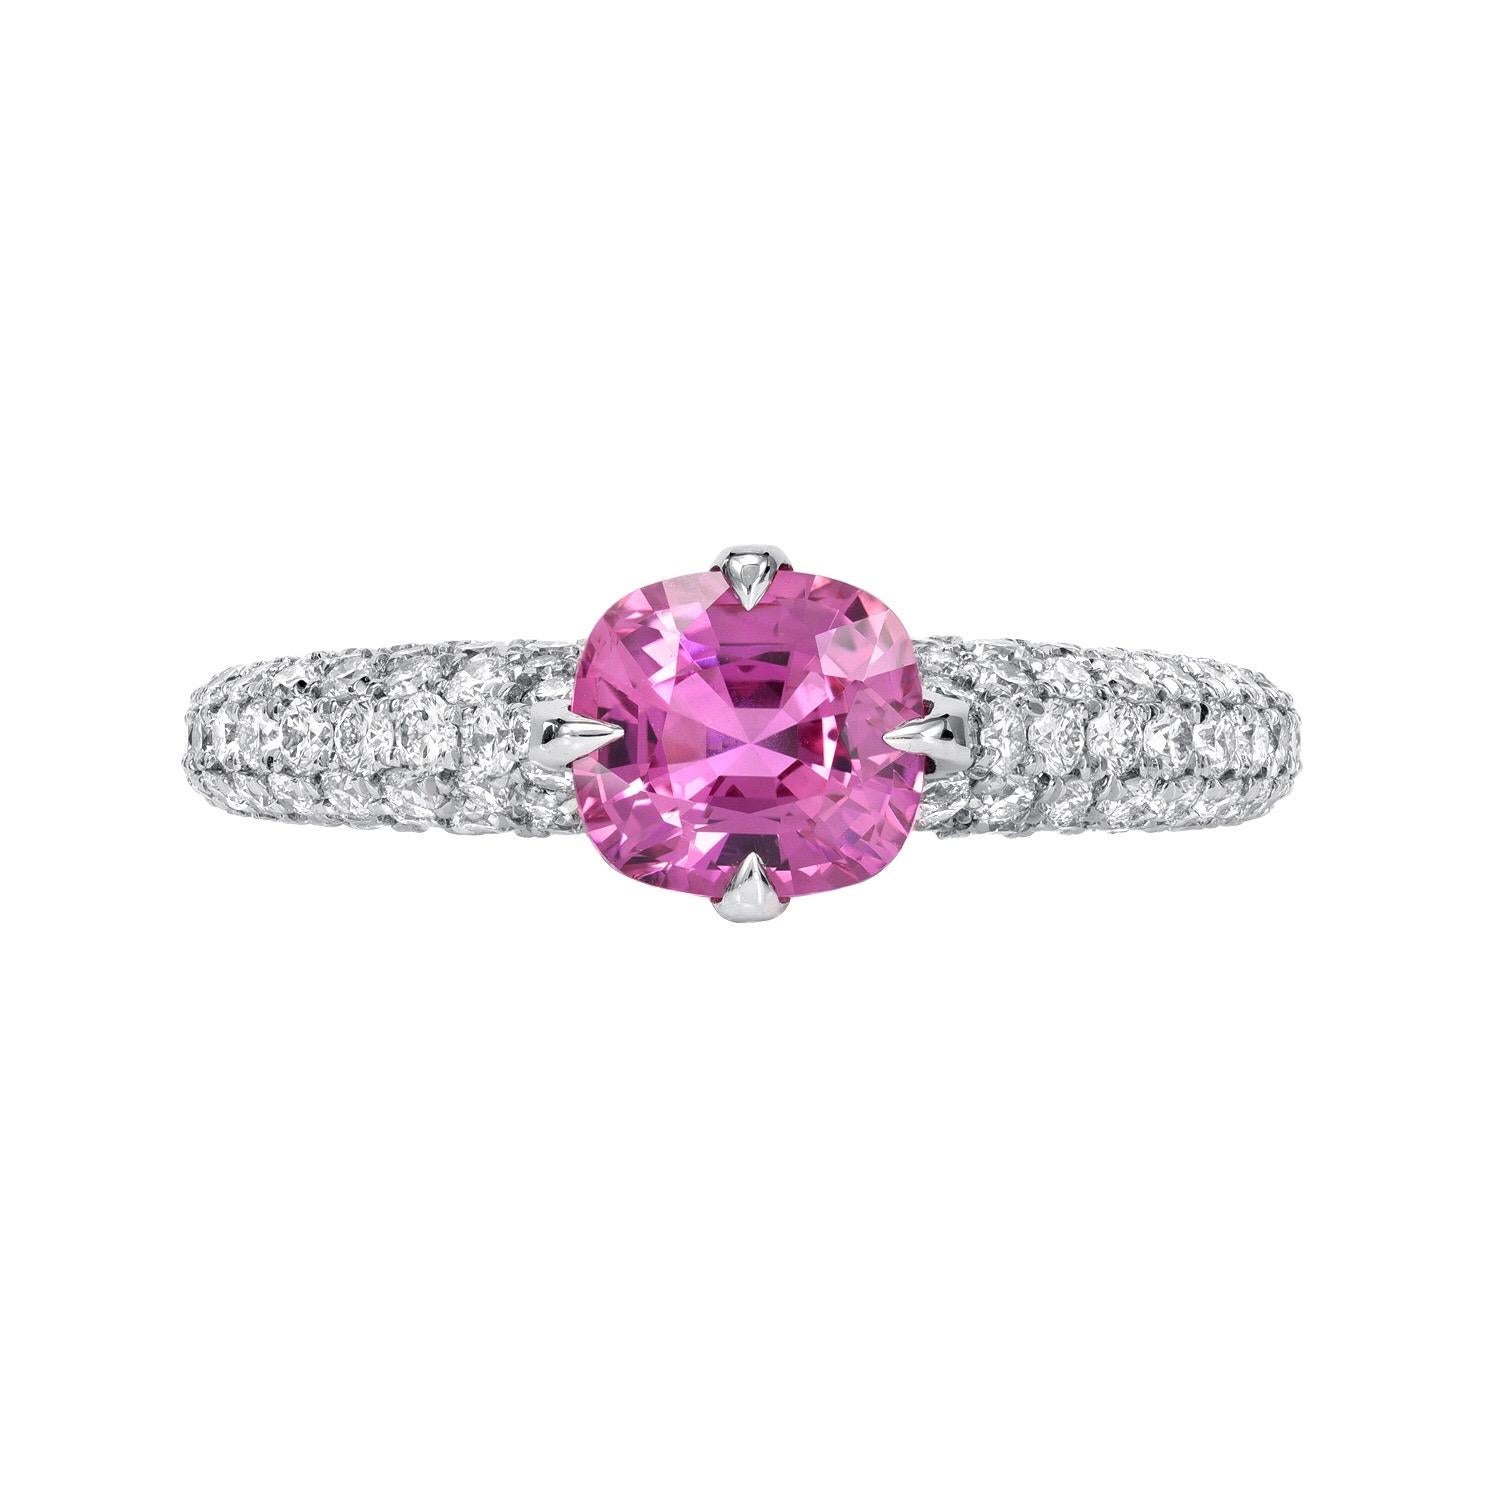 Modern Unheated Burma Pink Sapphire Ring 1.19 Carats No Heat For Sale